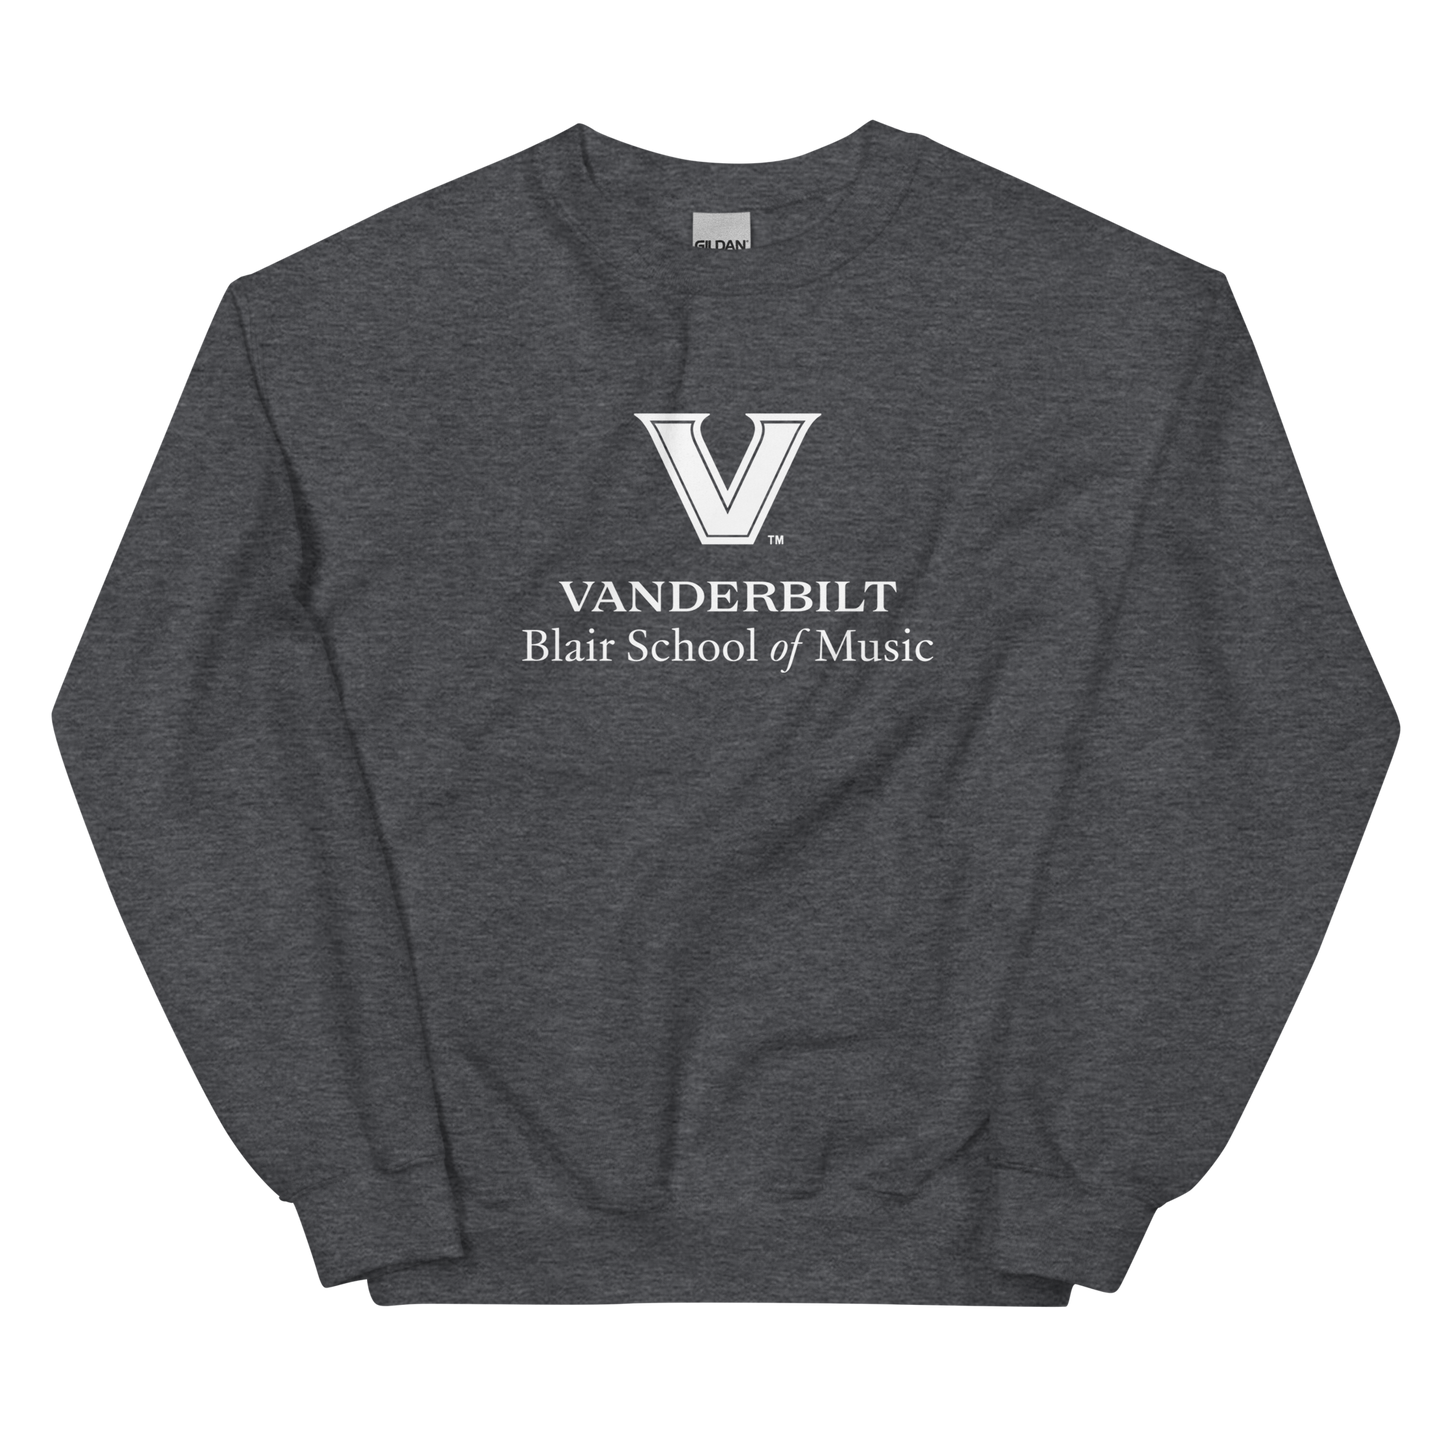 NEW Vanderbilt Blair Sweatshirt